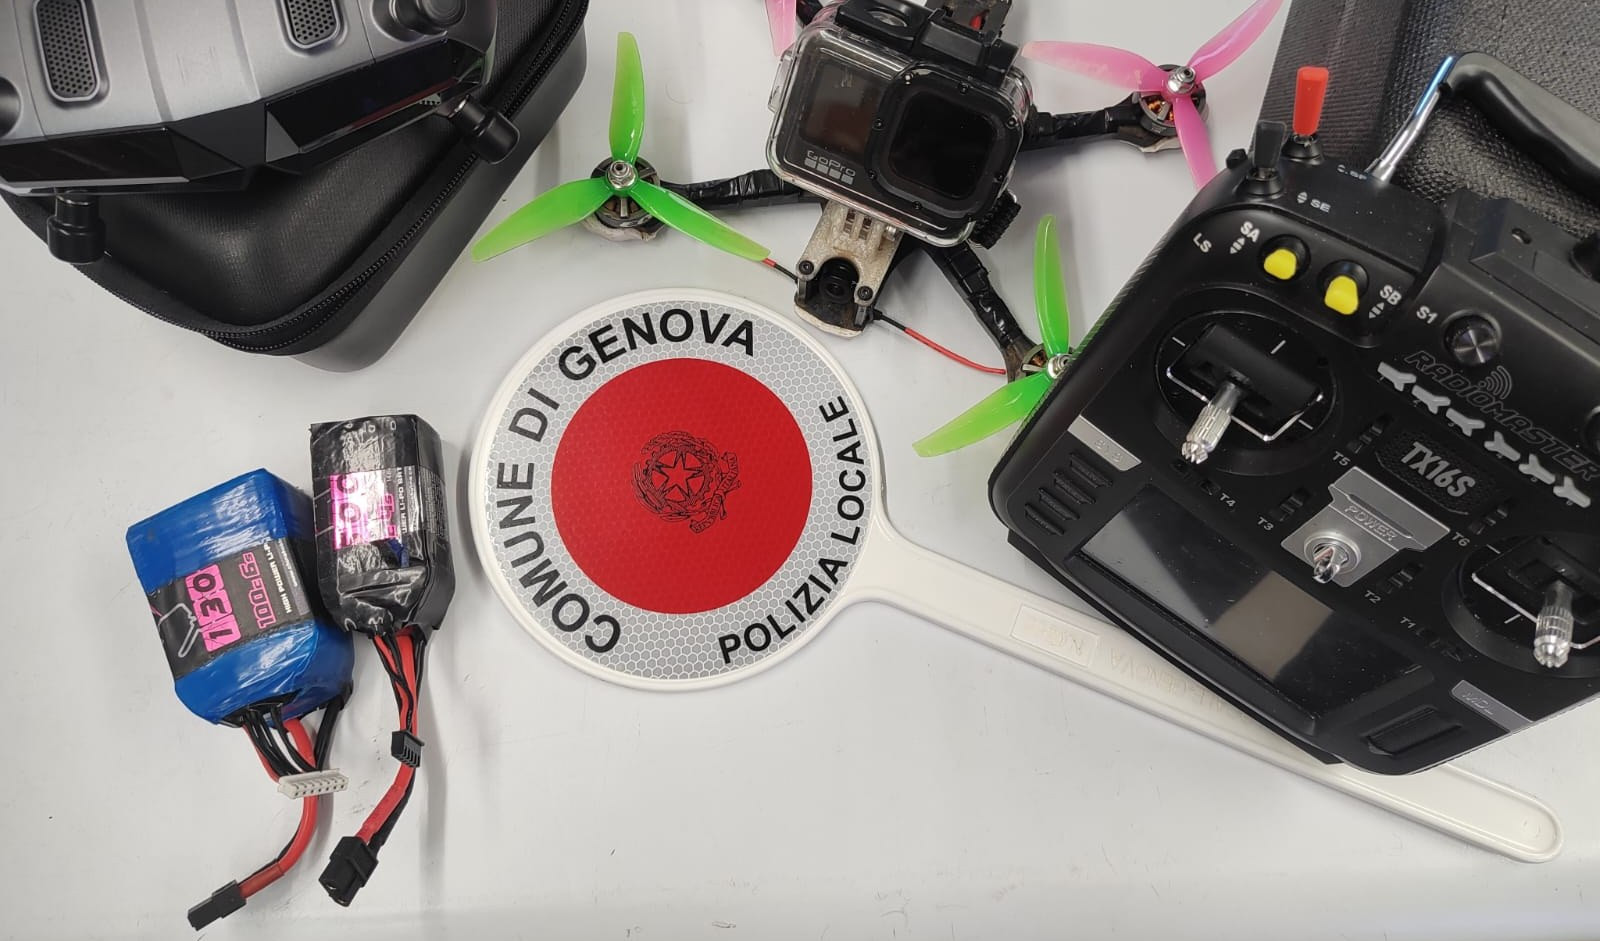 Cade drone senza assicurazione a Boccadasse, turista rischia multa da 30 mila euro